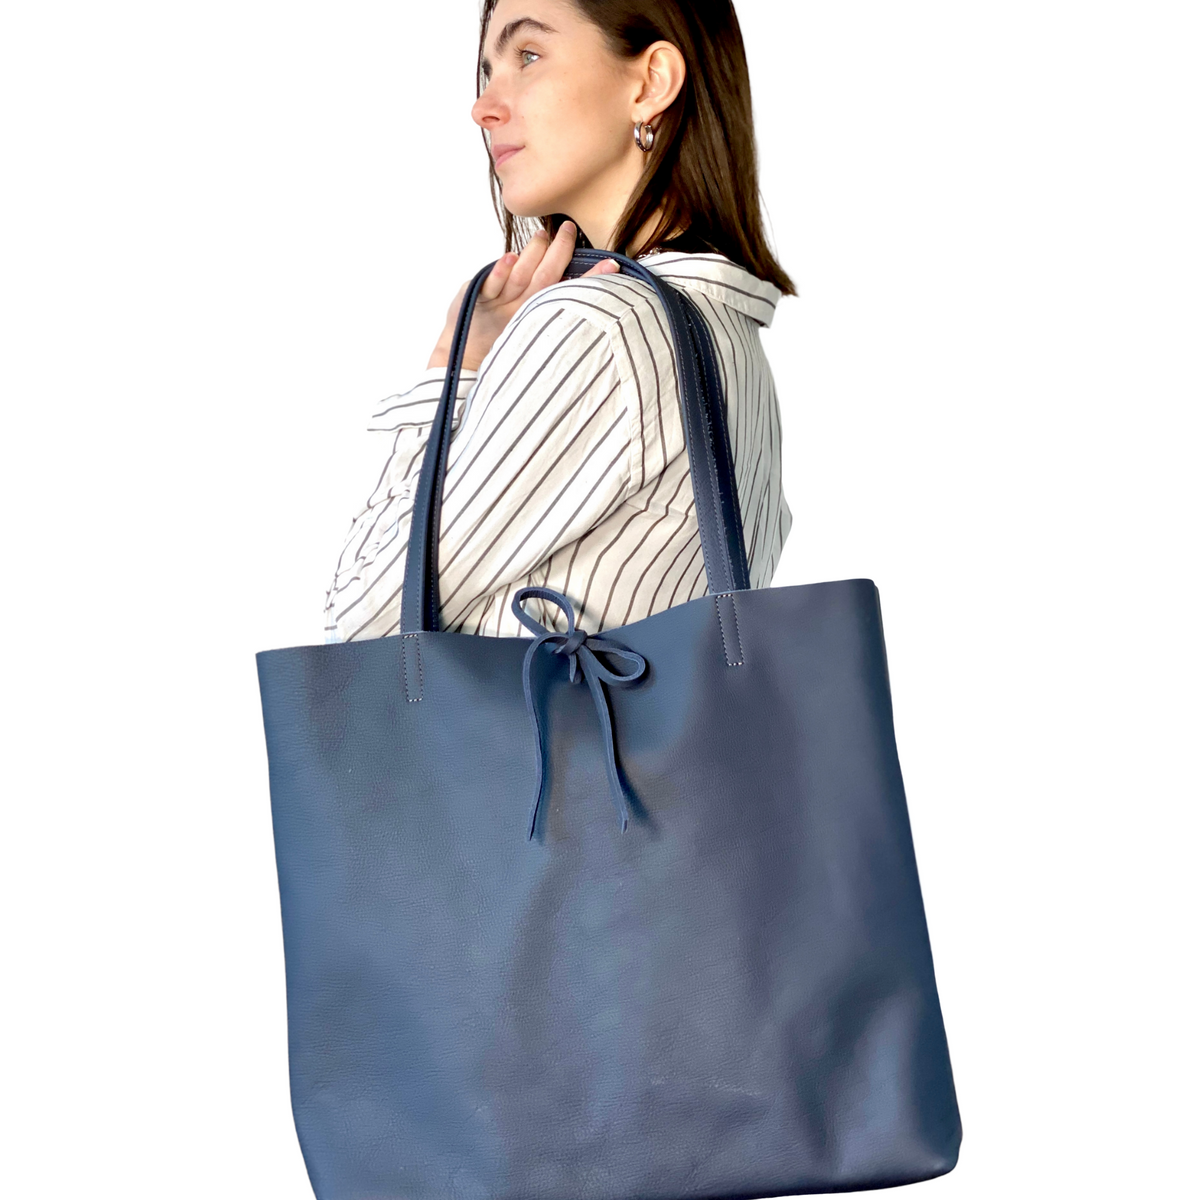 Everyday Xxl Handbag Navy OVERSIZE SHOPPER Bag DARK Blue Leather Shopper Leather Handbag External Pocket Large Tote Bag Shopping Bag